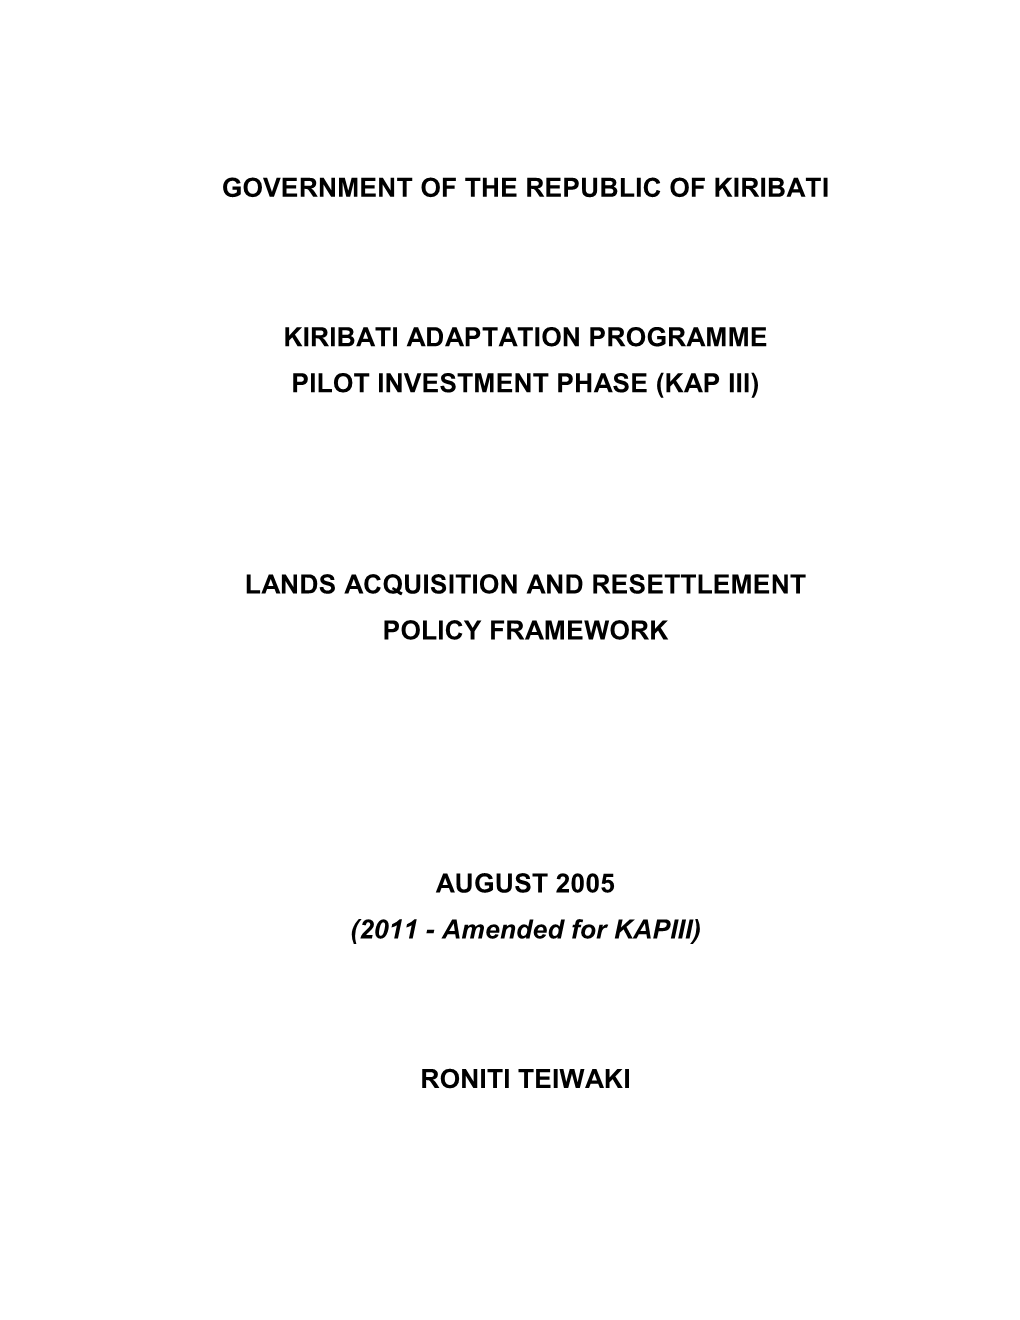 Kiribati Apadation Programme Phase III Lands Acquisition and Resettlement Policy Framework